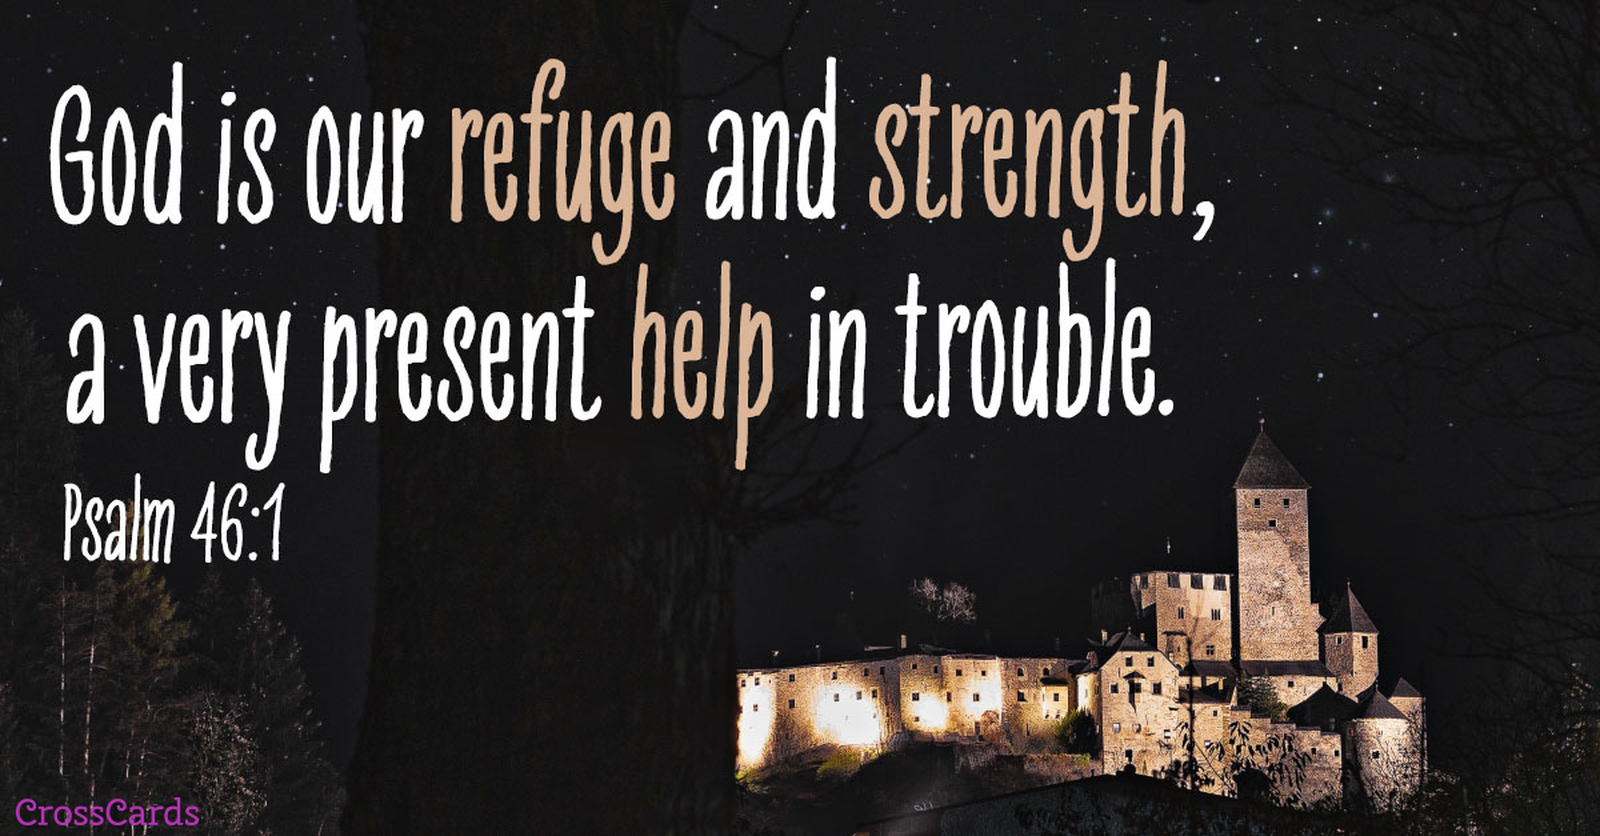 Psalm 46:1 - Refuge and Strength